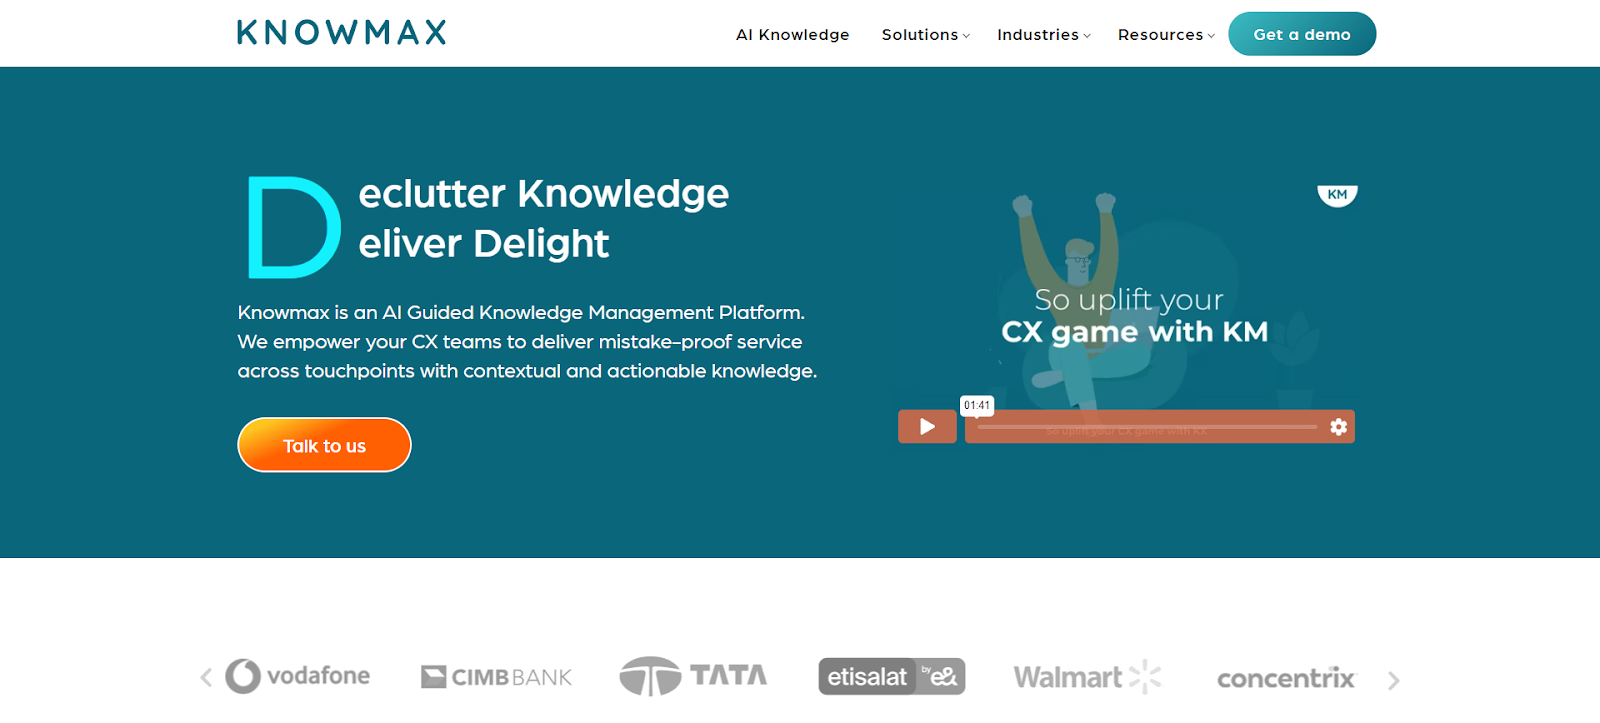 A screenshot of Knowmax's website